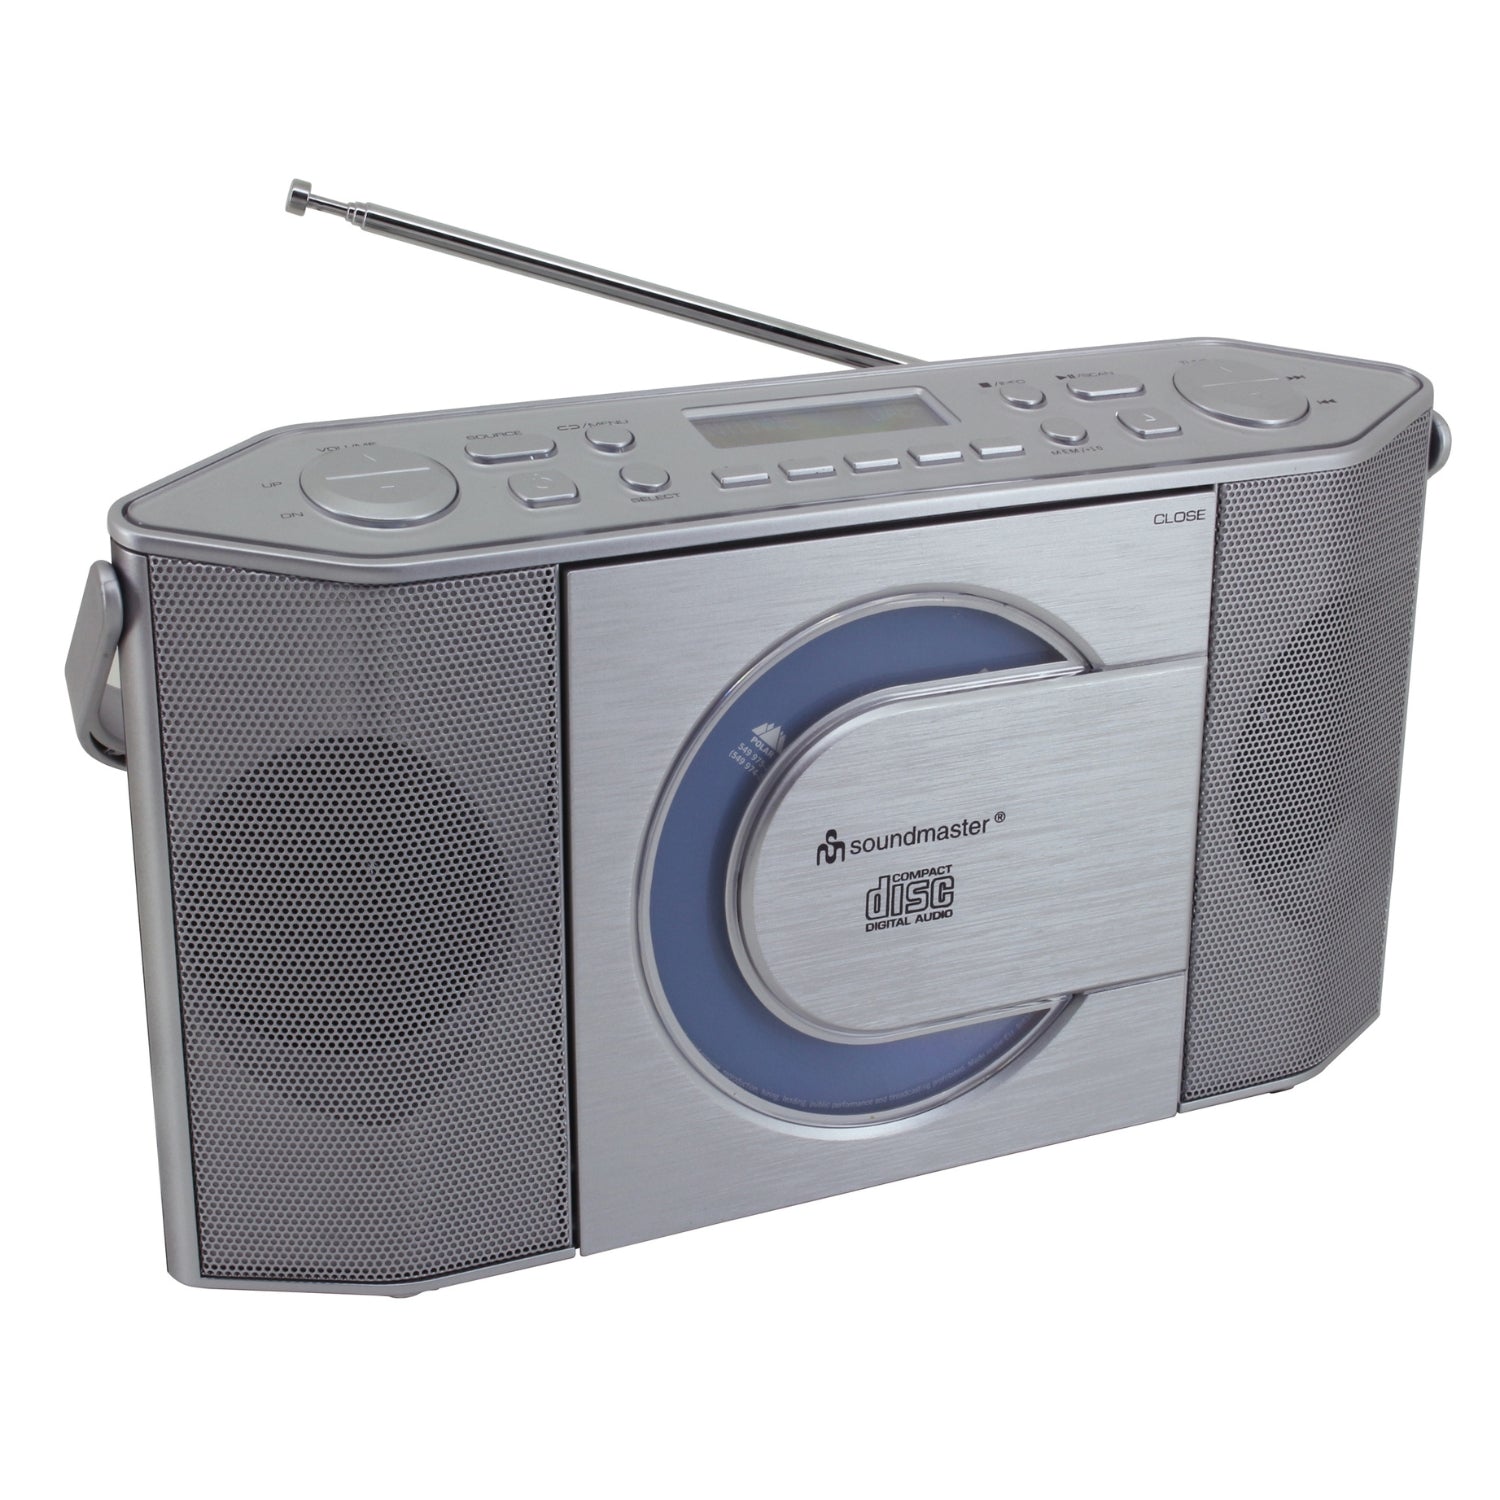 Soundmaster RCD1770SI Digitalradio Radiorecorder DAB+ mit USB und CD-Player MP3 Kopfhörer Uhr